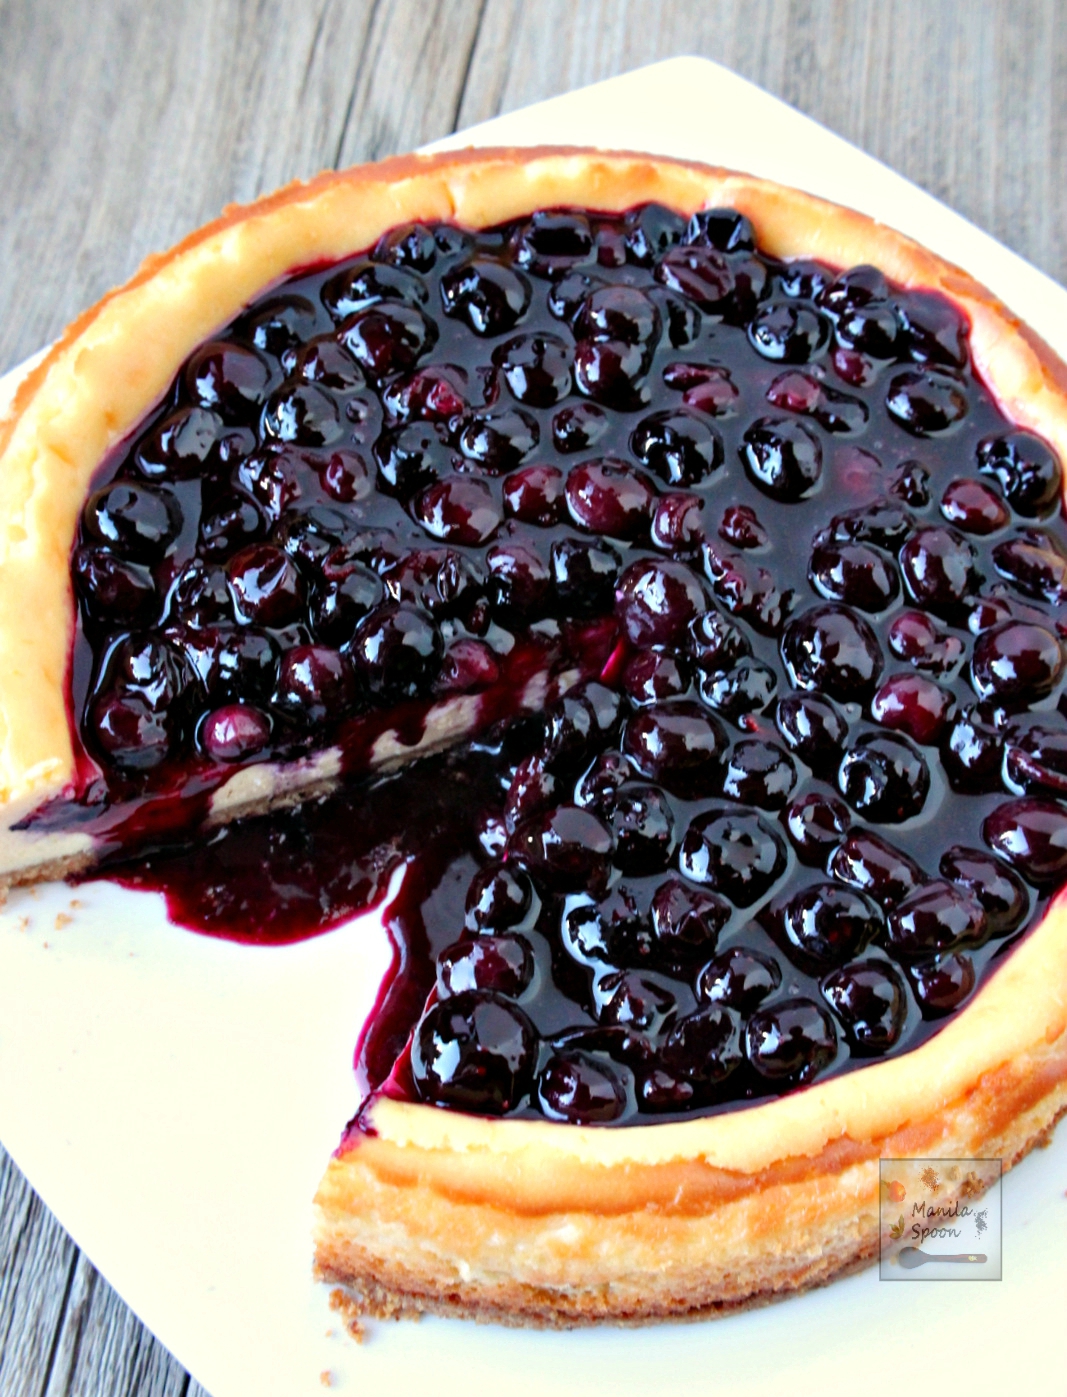 Yummy Blueberry Cheesecake | Manila Spoon